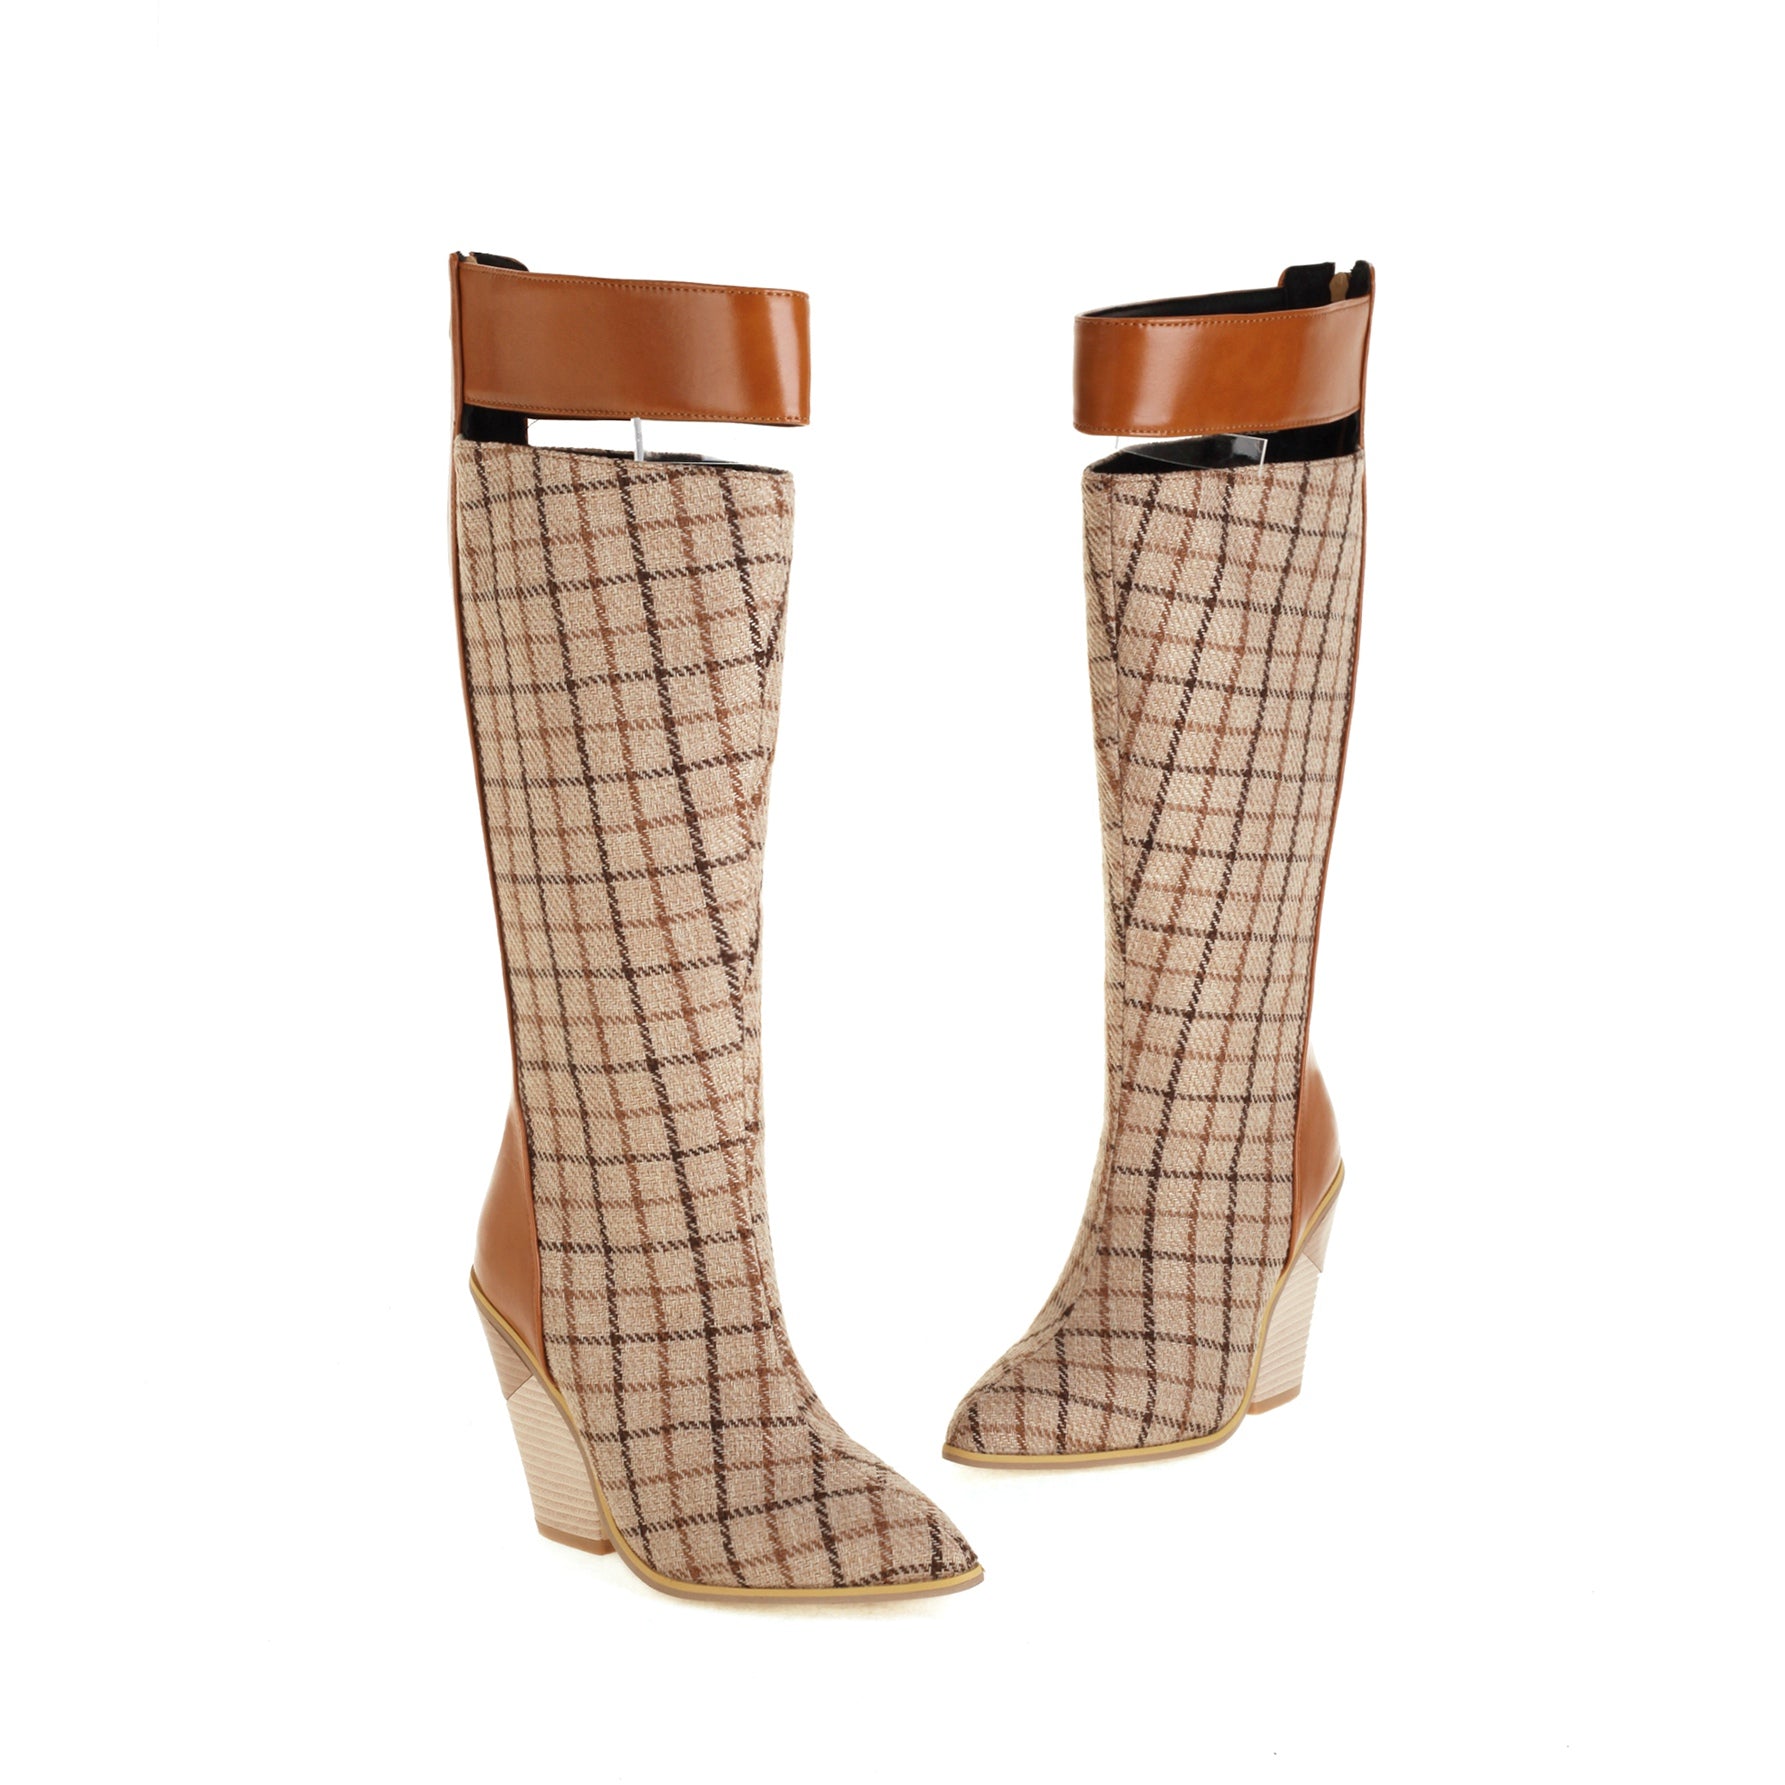 Bigsizeheels American folk wooden heel boots - Brown freeshipping - bigsizeheel®-size5-size15 -All Plus Sizes Available!